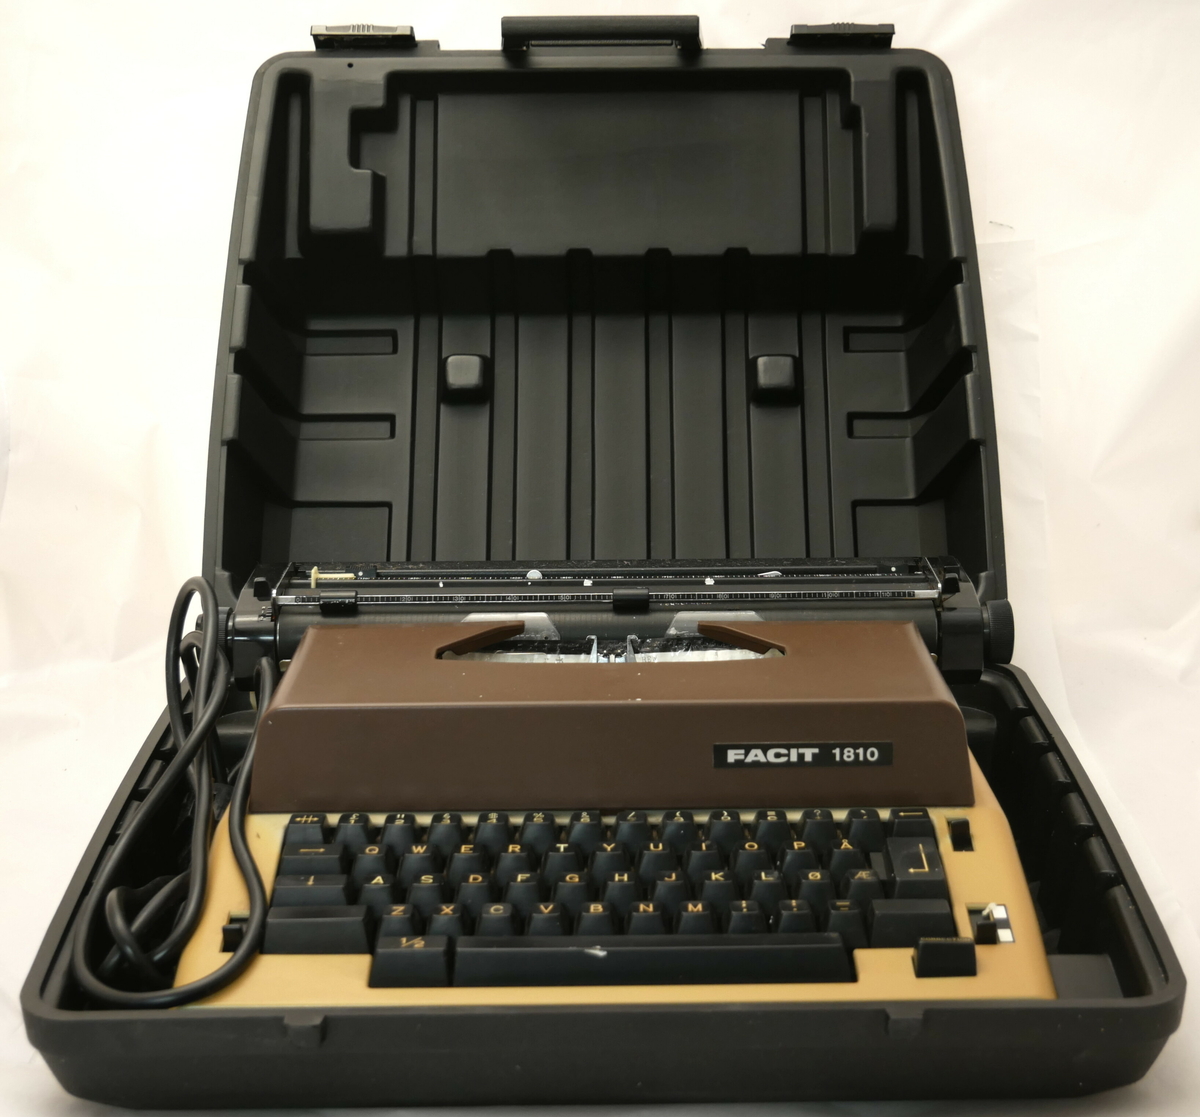 Elektrisk skrivemaskin i plastkoffert. Kofferten har handtak. Skrivemaskinen har leidning med støpsel og den kan løftast ut av kofferten.